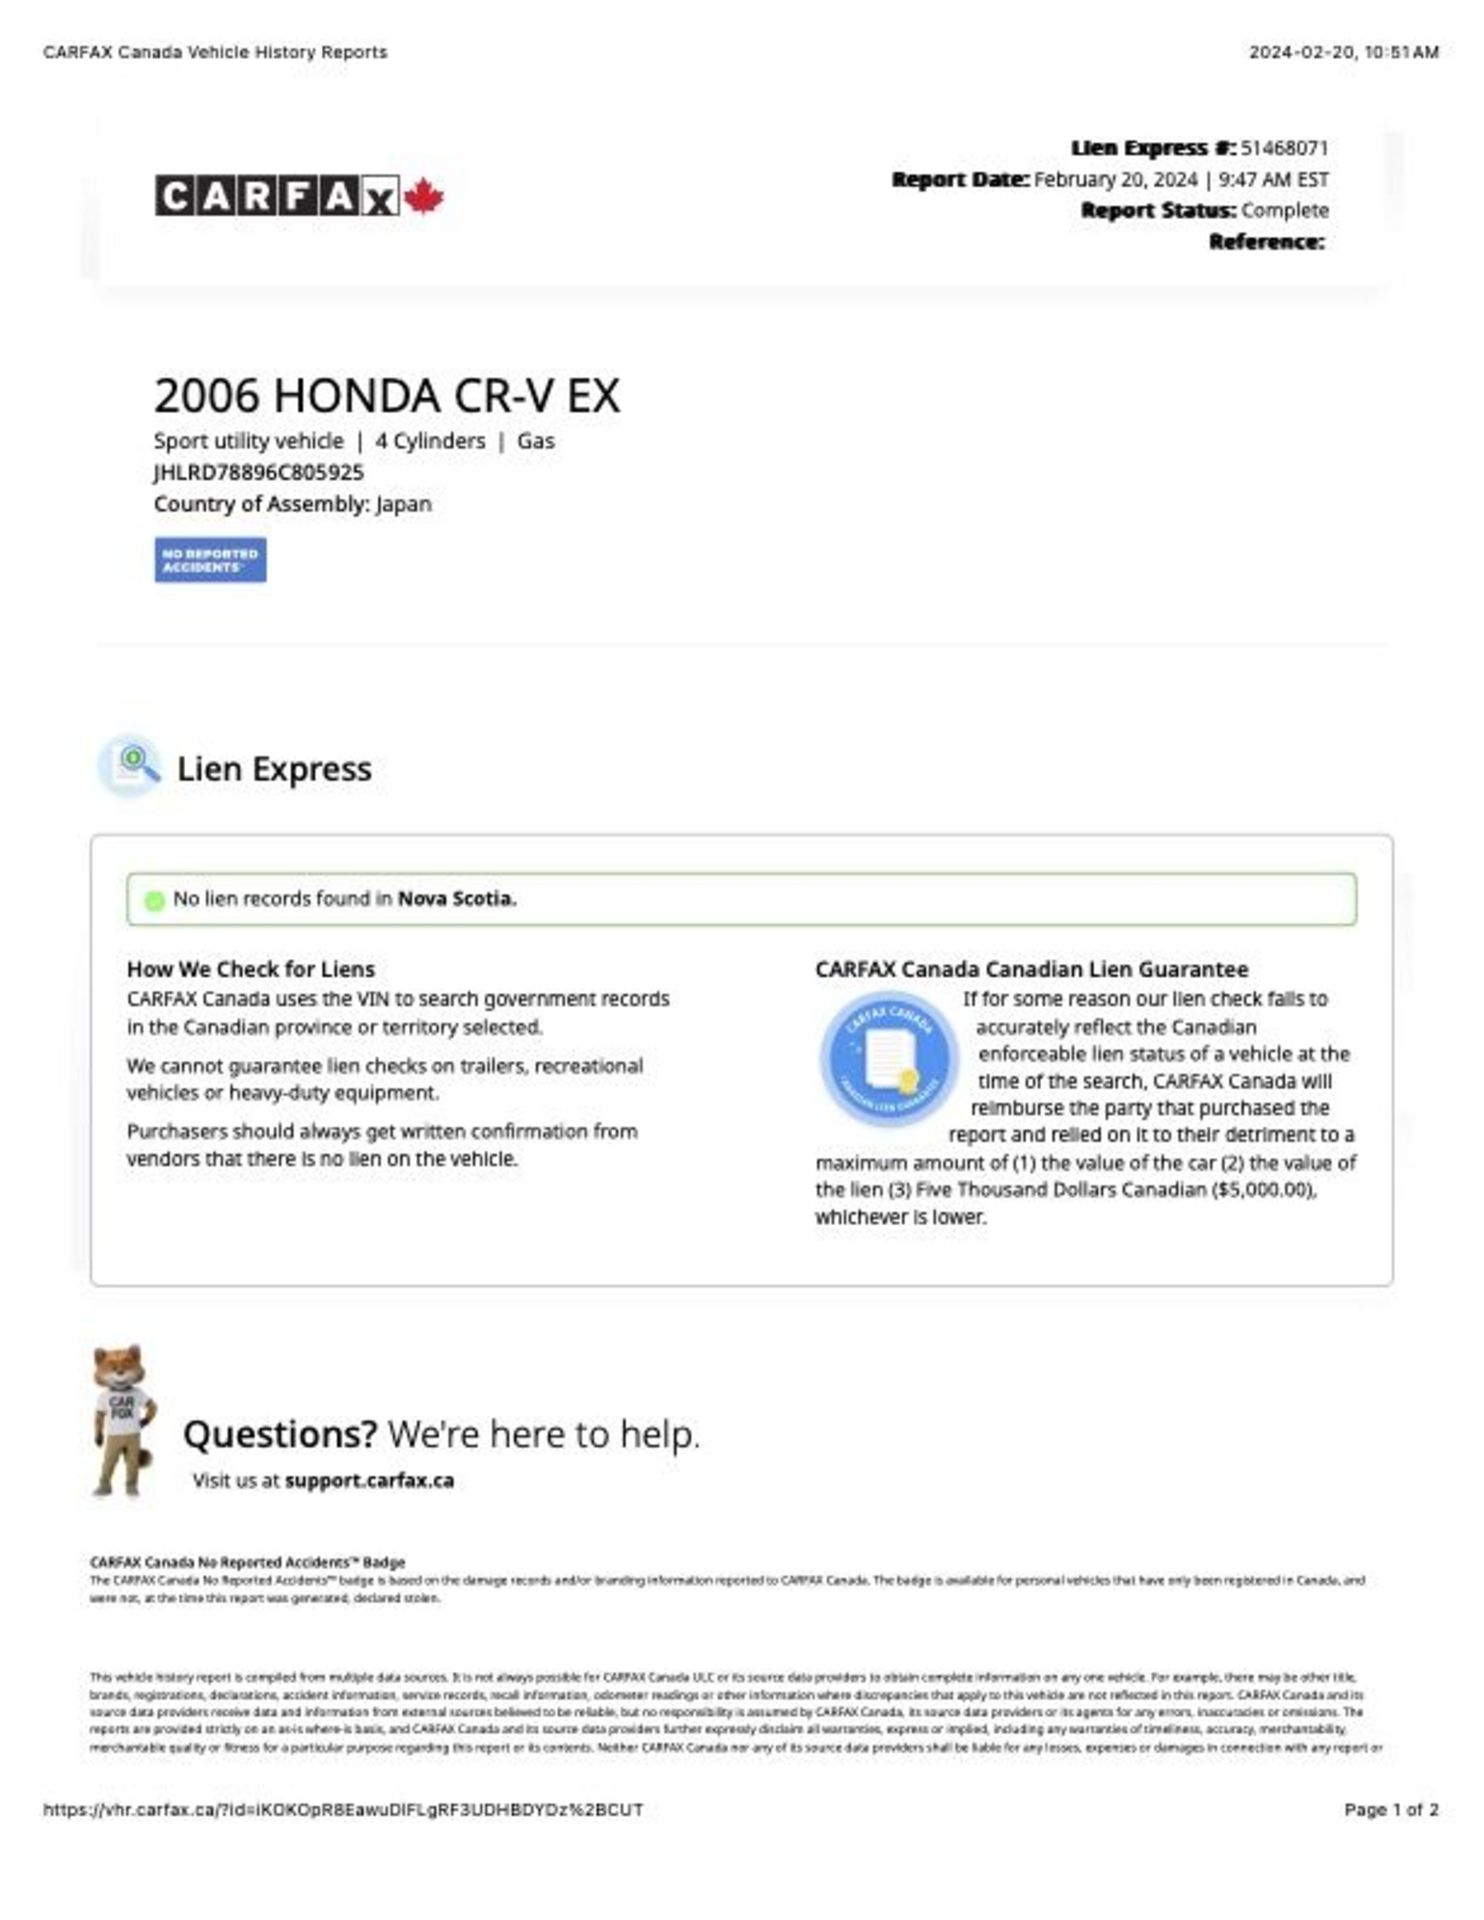 2006 Honda CR-V EX - Image 9 of 13